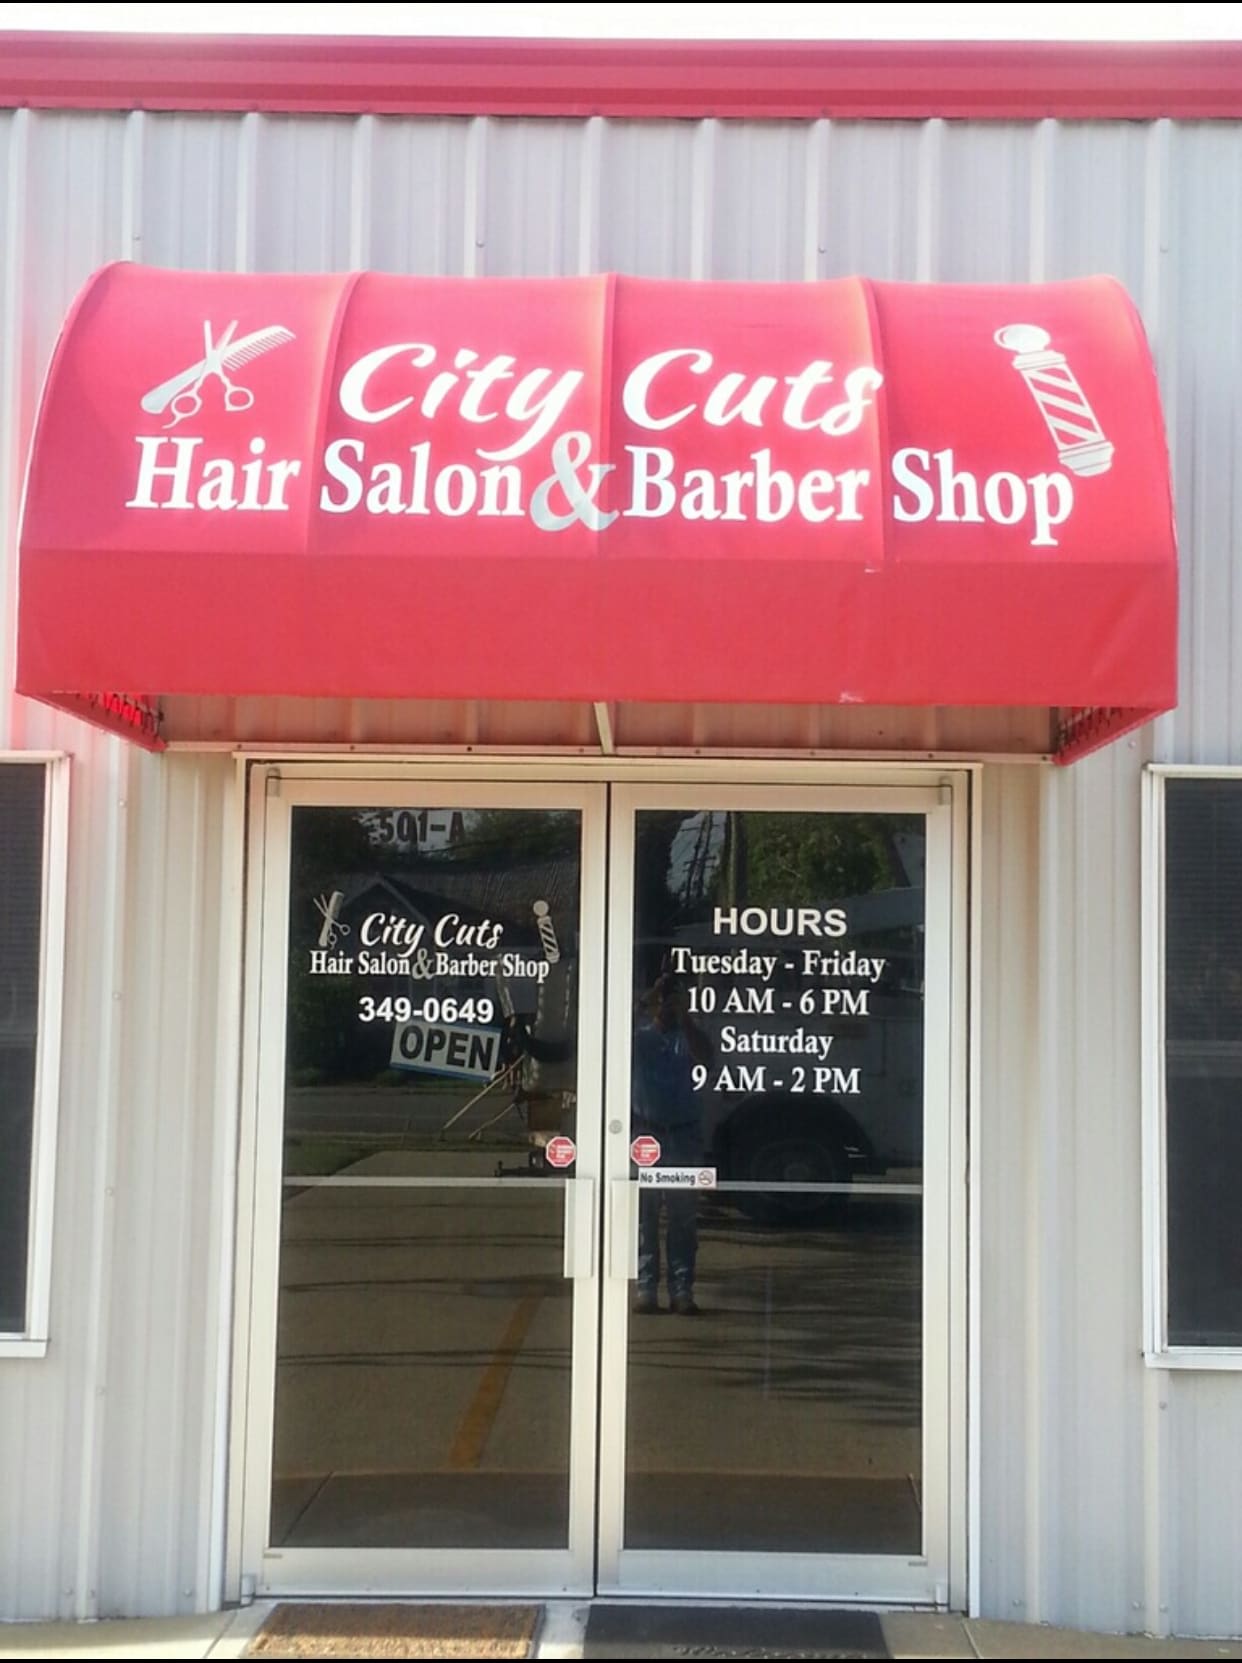 City Cuts Hair Salon & Barber